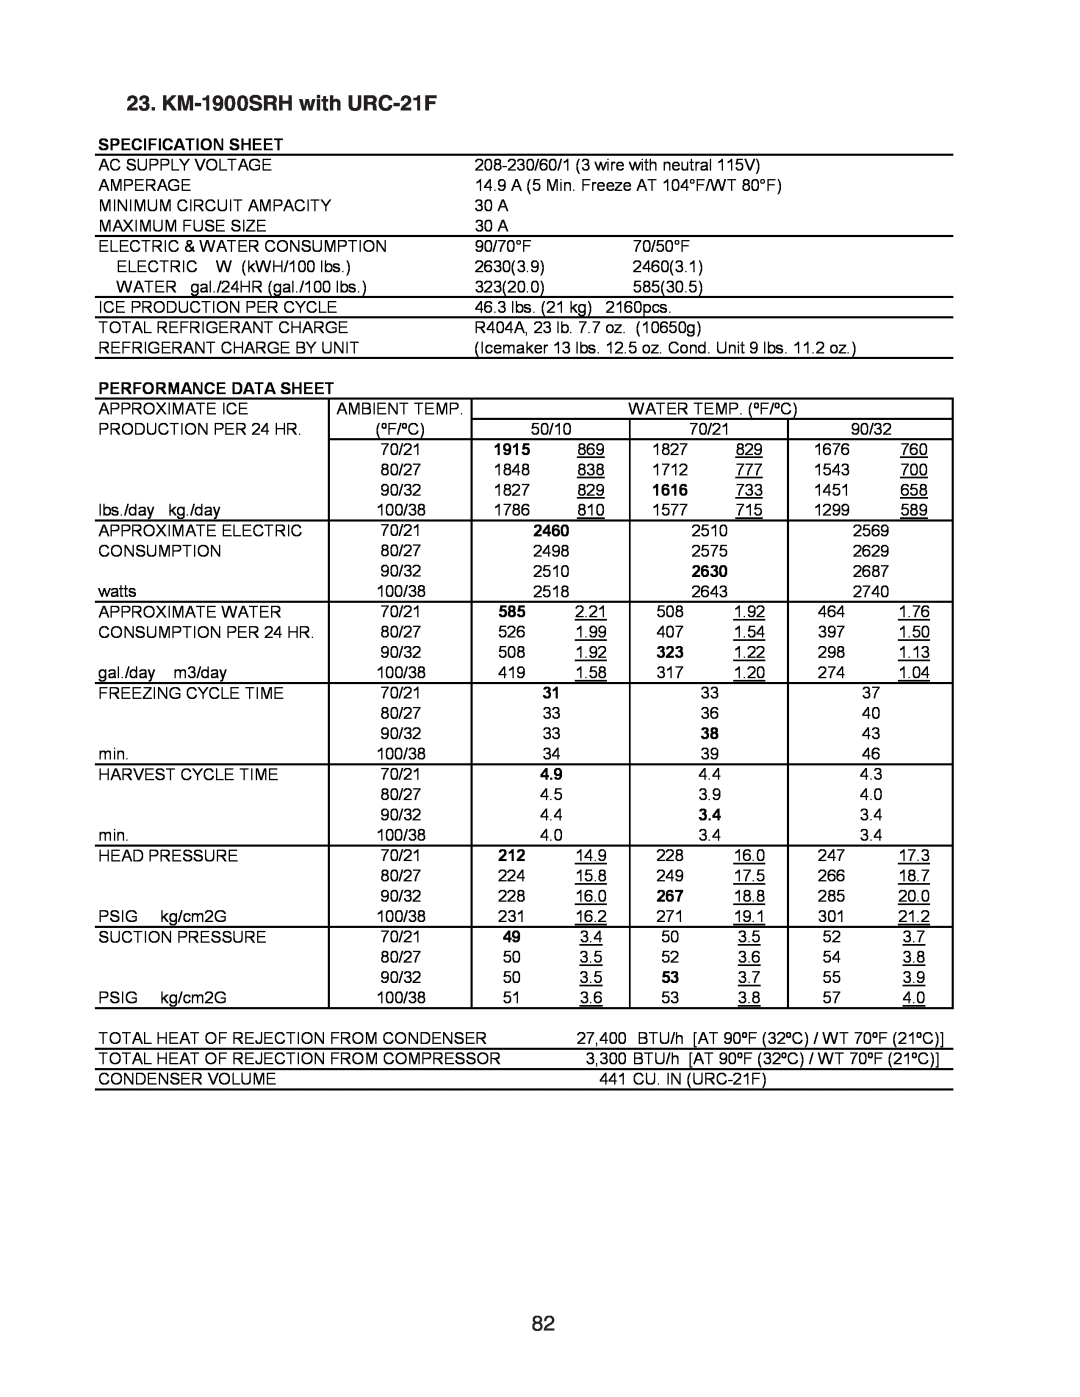 Hoshizaki SRH/3 KM-2100SWH3, SRH/3 KM-1400SWH-M KM-1900SRH with URC-21F, Specification Sheet, Performance Data Sheet, 2630 